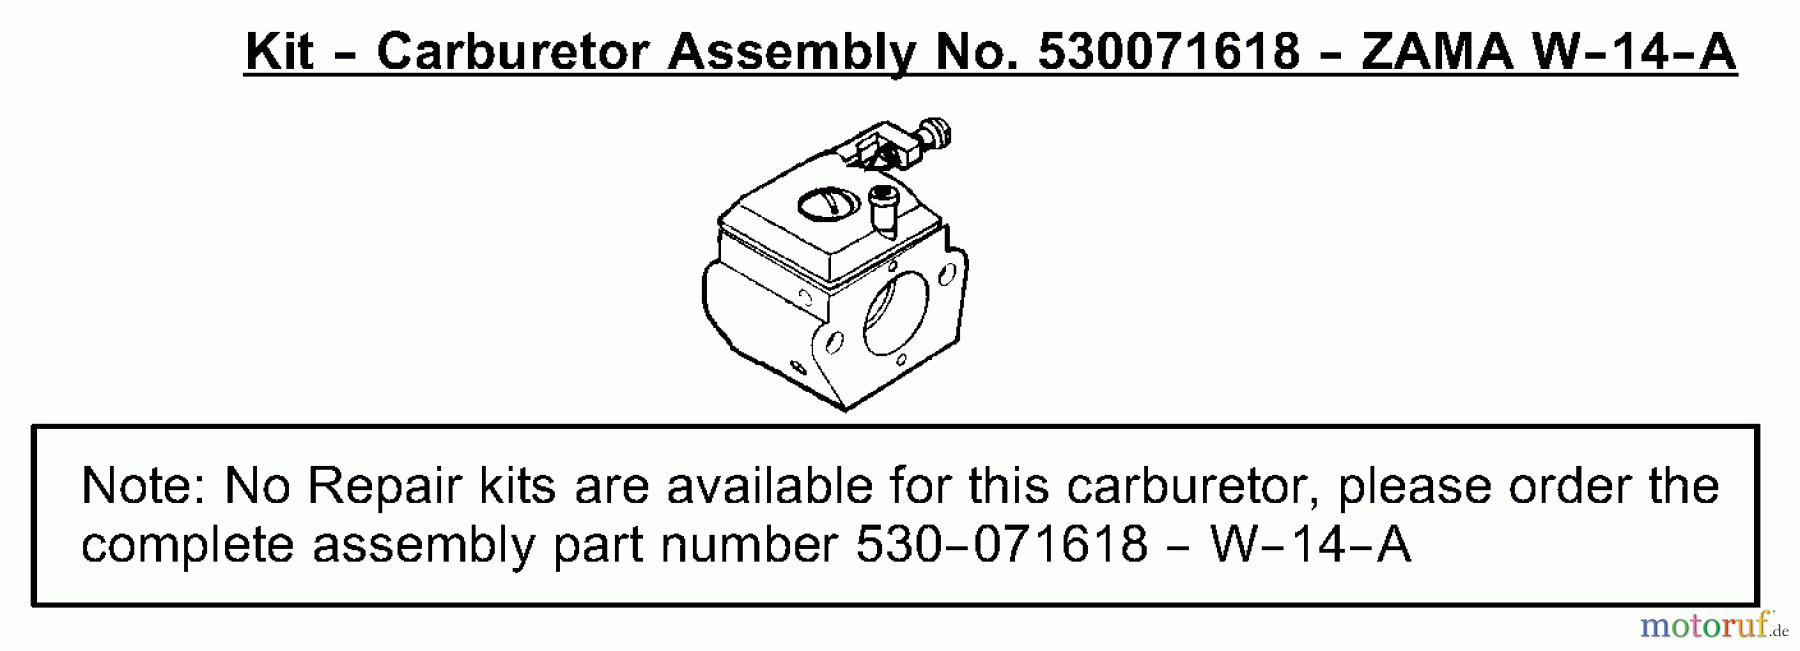  Poulan / Weed Eater Motorsägen 2155 (Type 4) - Poulan Plus Chainsaw Carburetor Assembly (Zama W-14-A) P/N 530071618